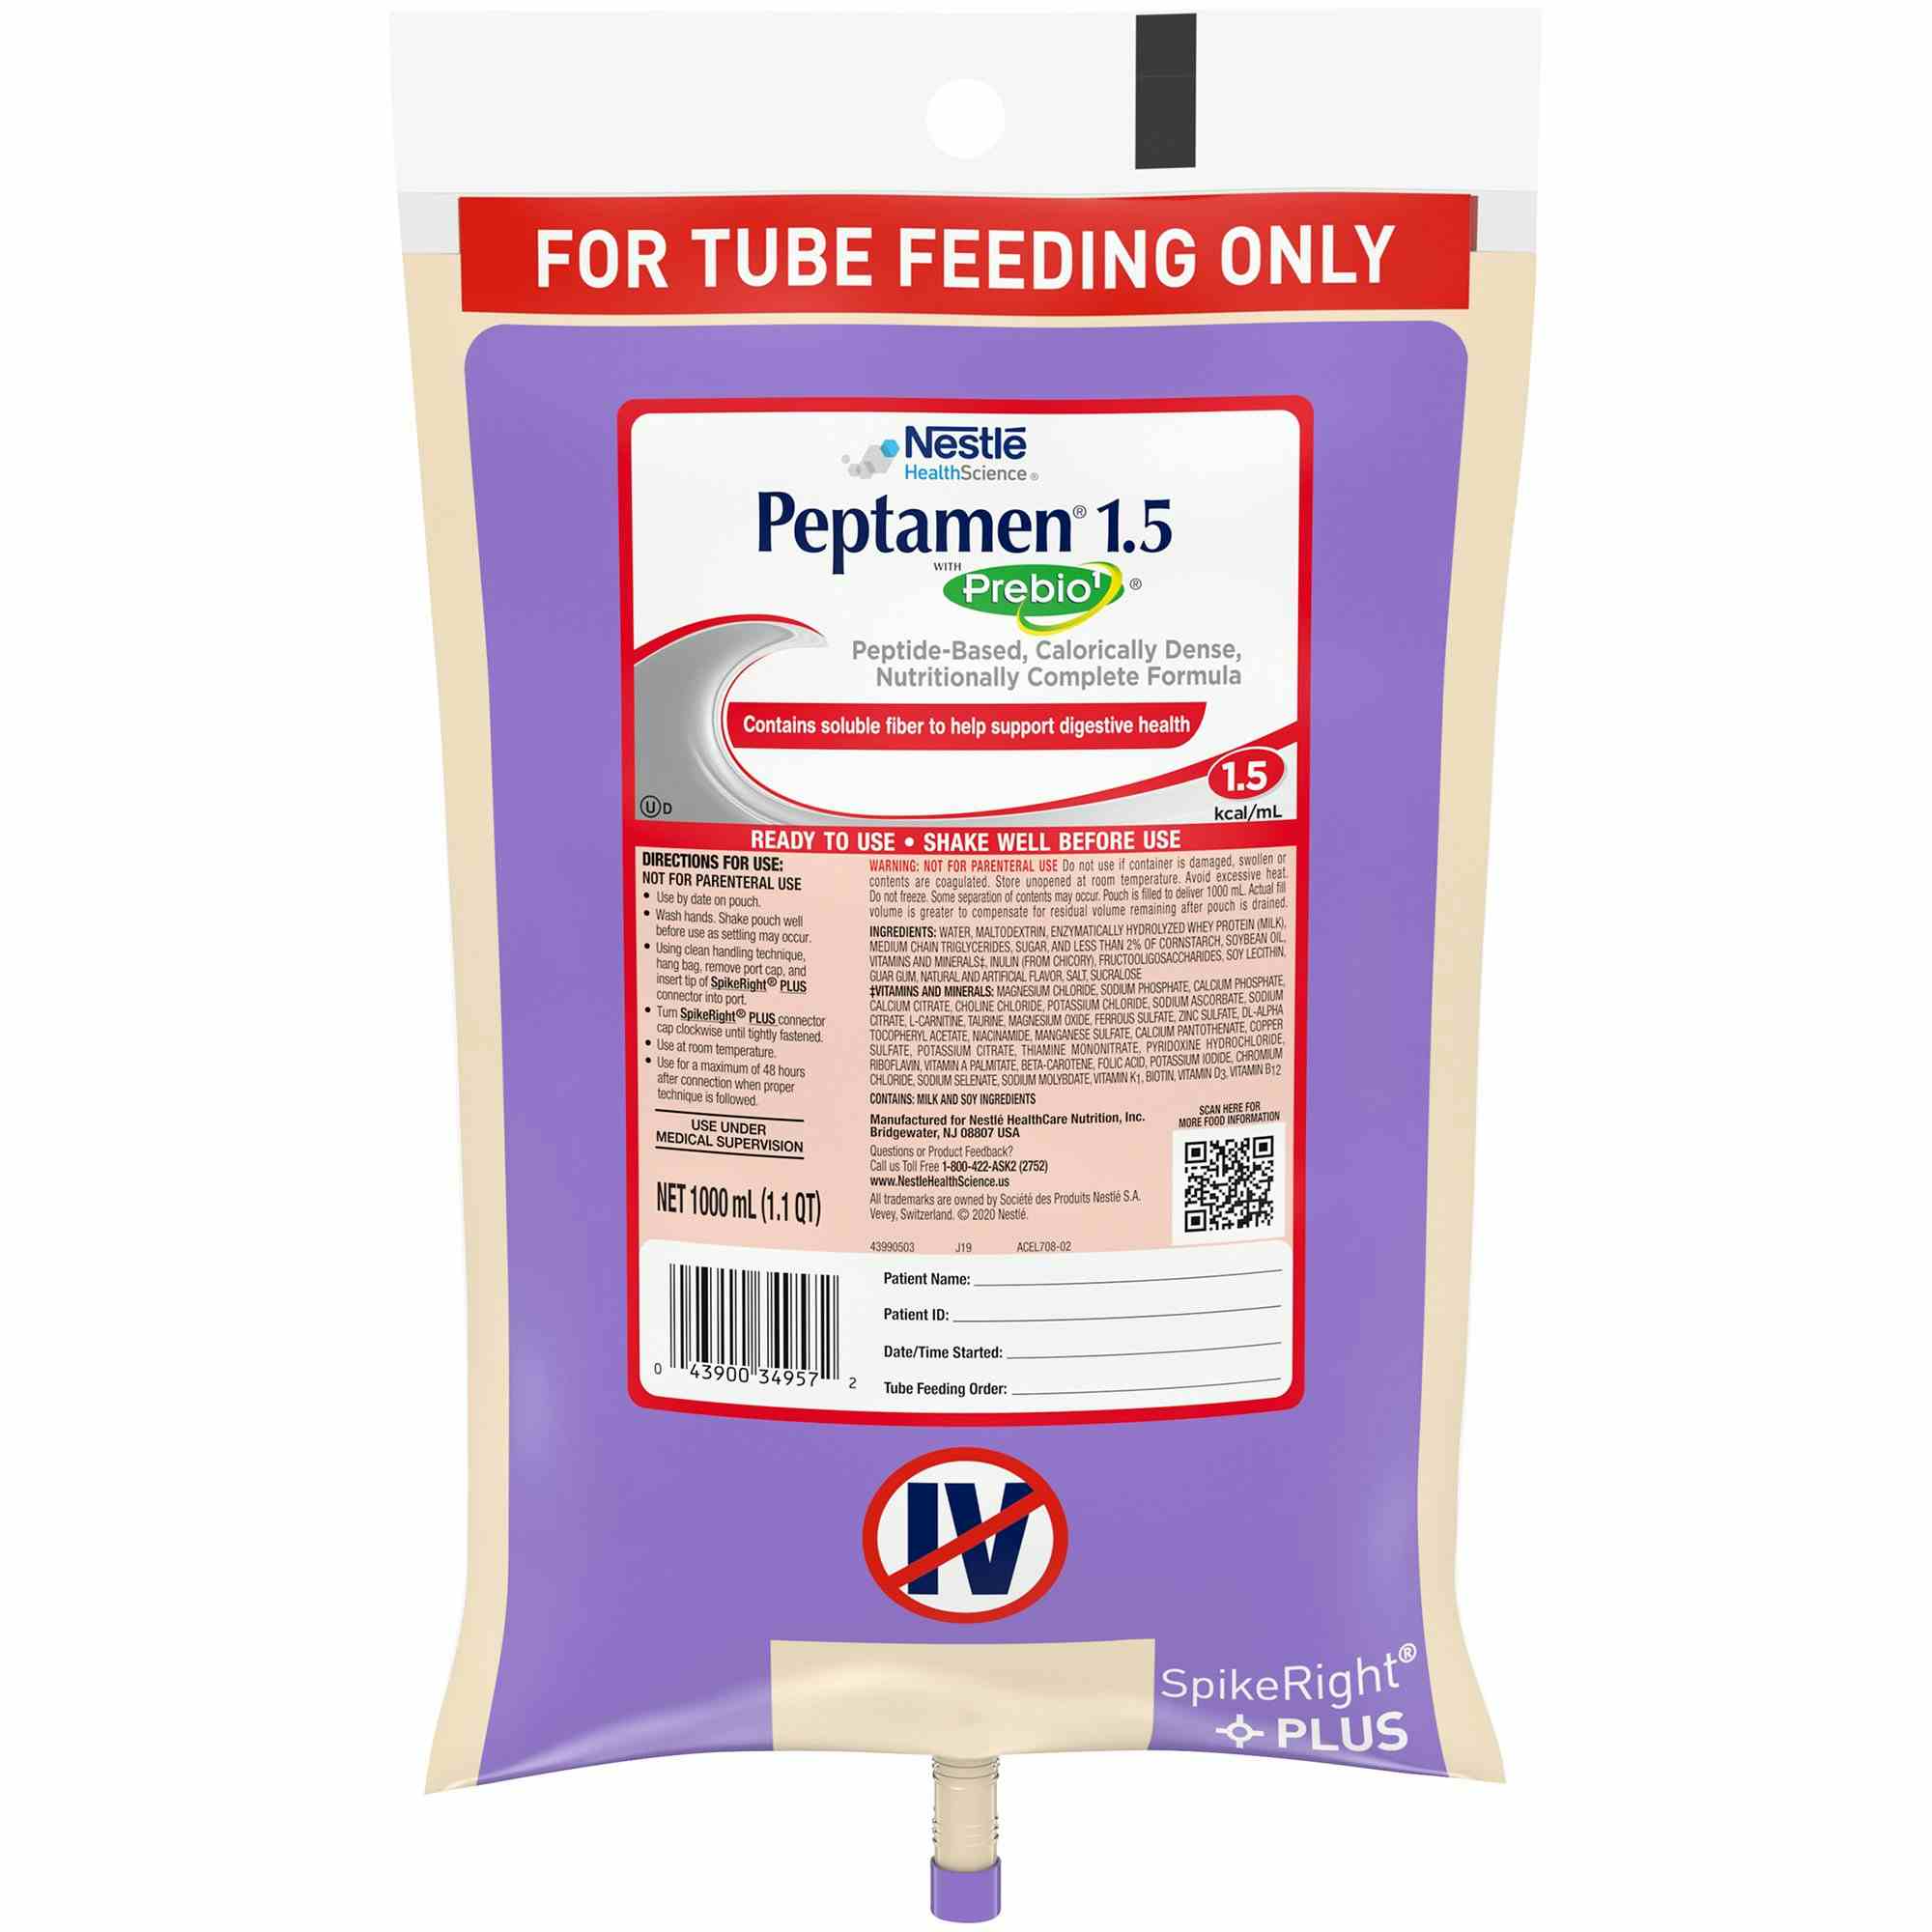 Nestle HealthScience Peptamen 1.5 with Prebio1 Peptide-Based Calorically Dense Nutritionally Complete Tube Feeding Formula, 33.8 oz. , 10043900349579, Case of 6